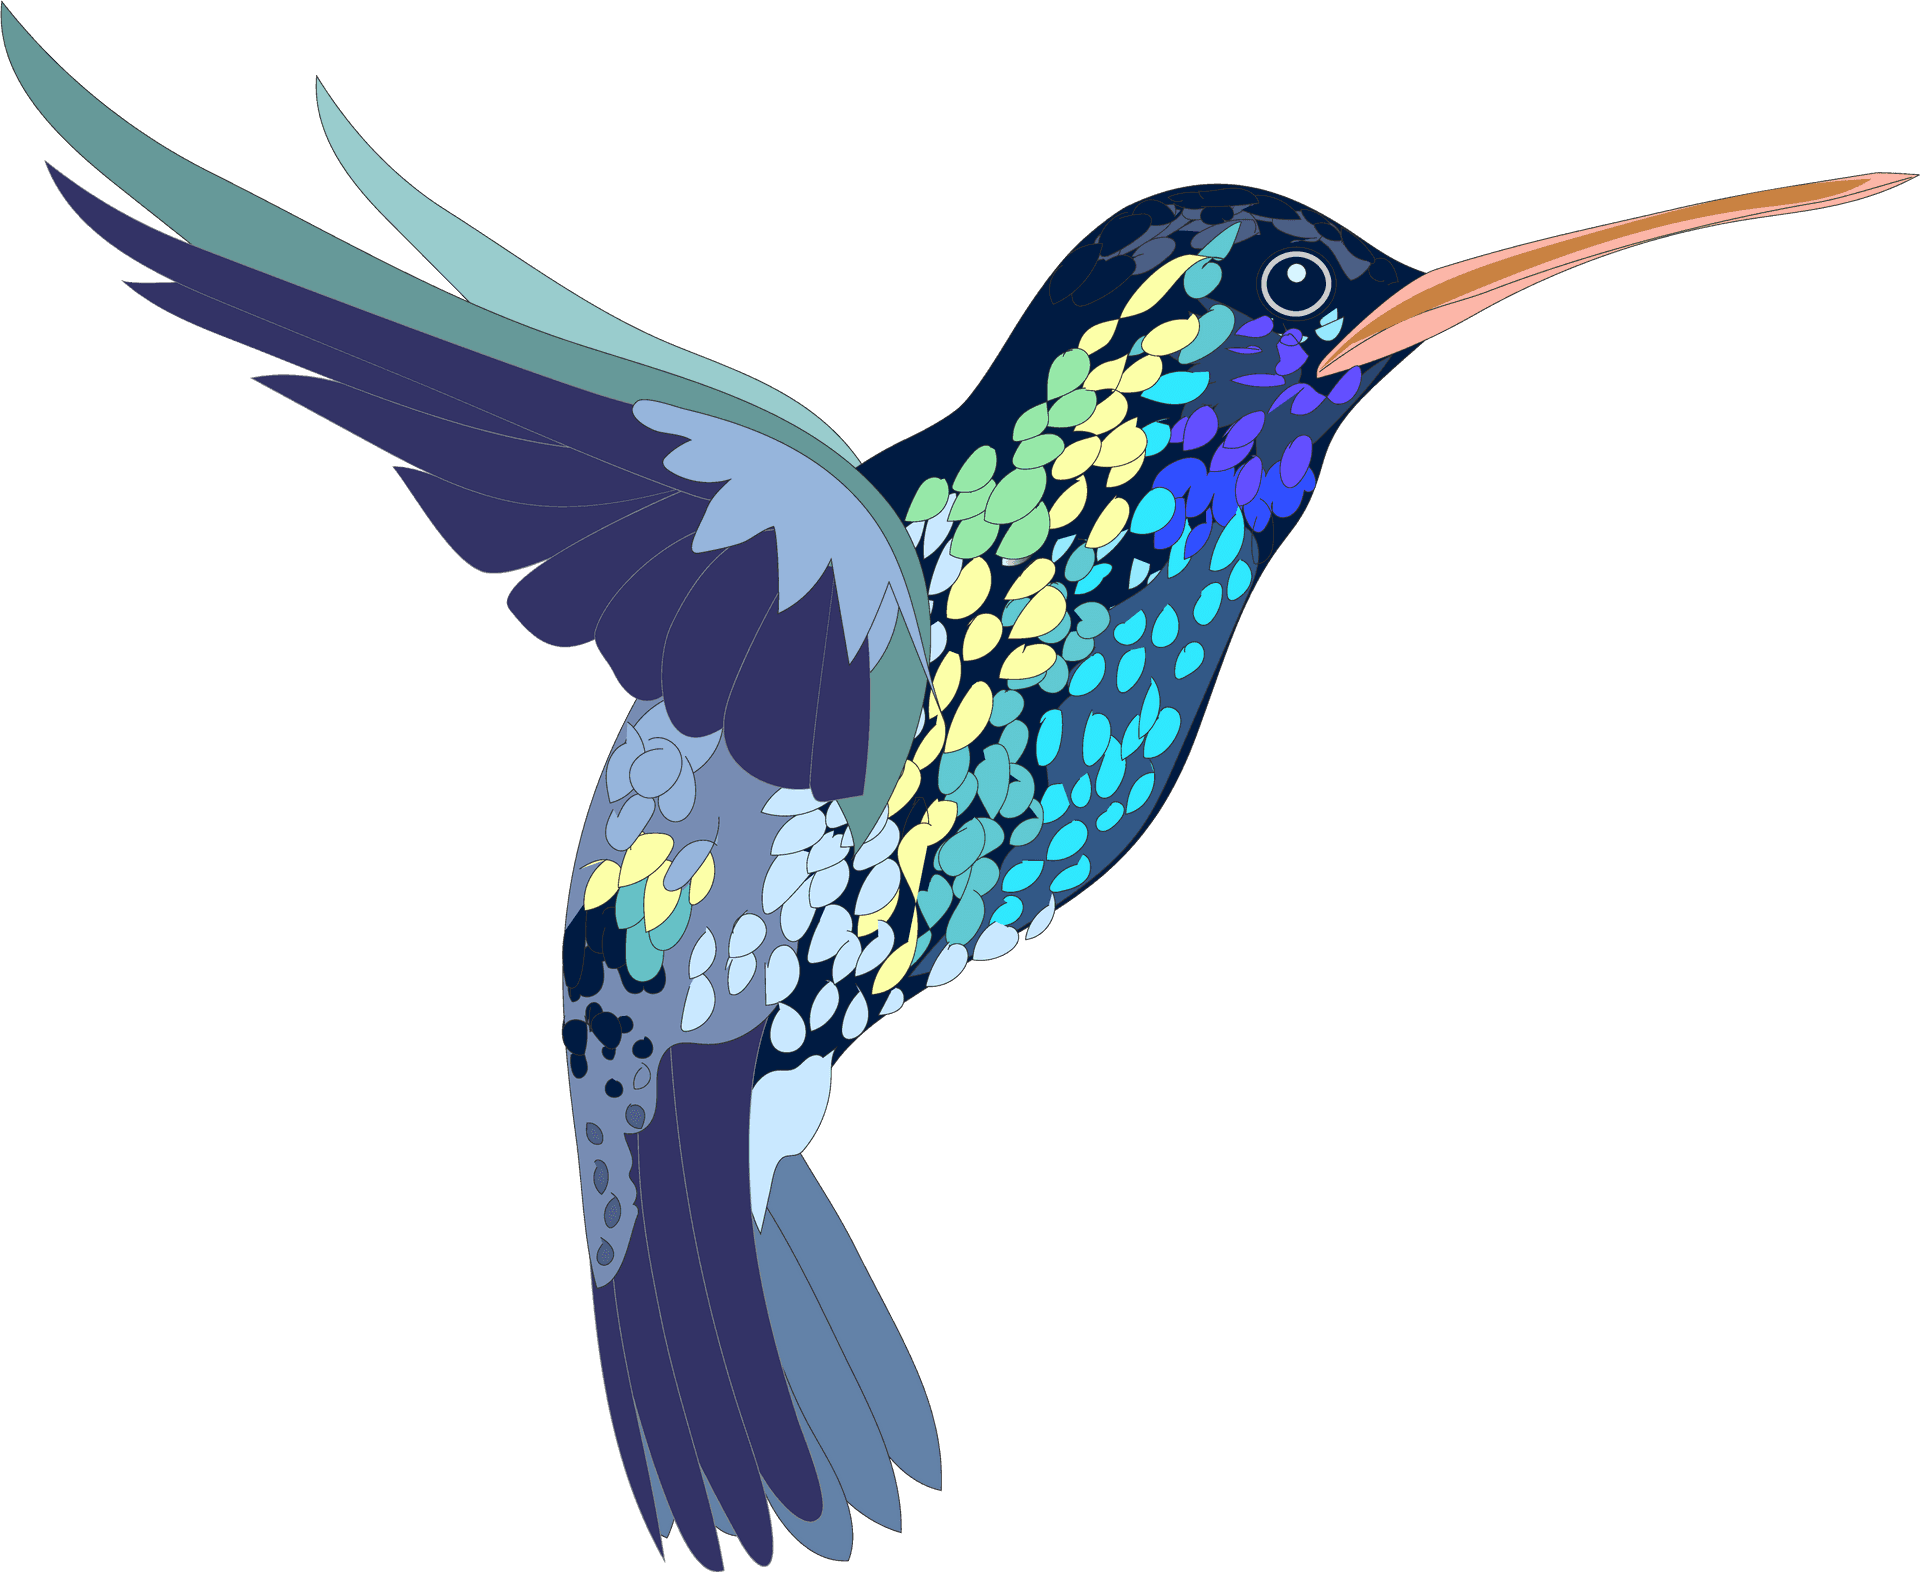 Colorful Hummingbird Illustration PNG